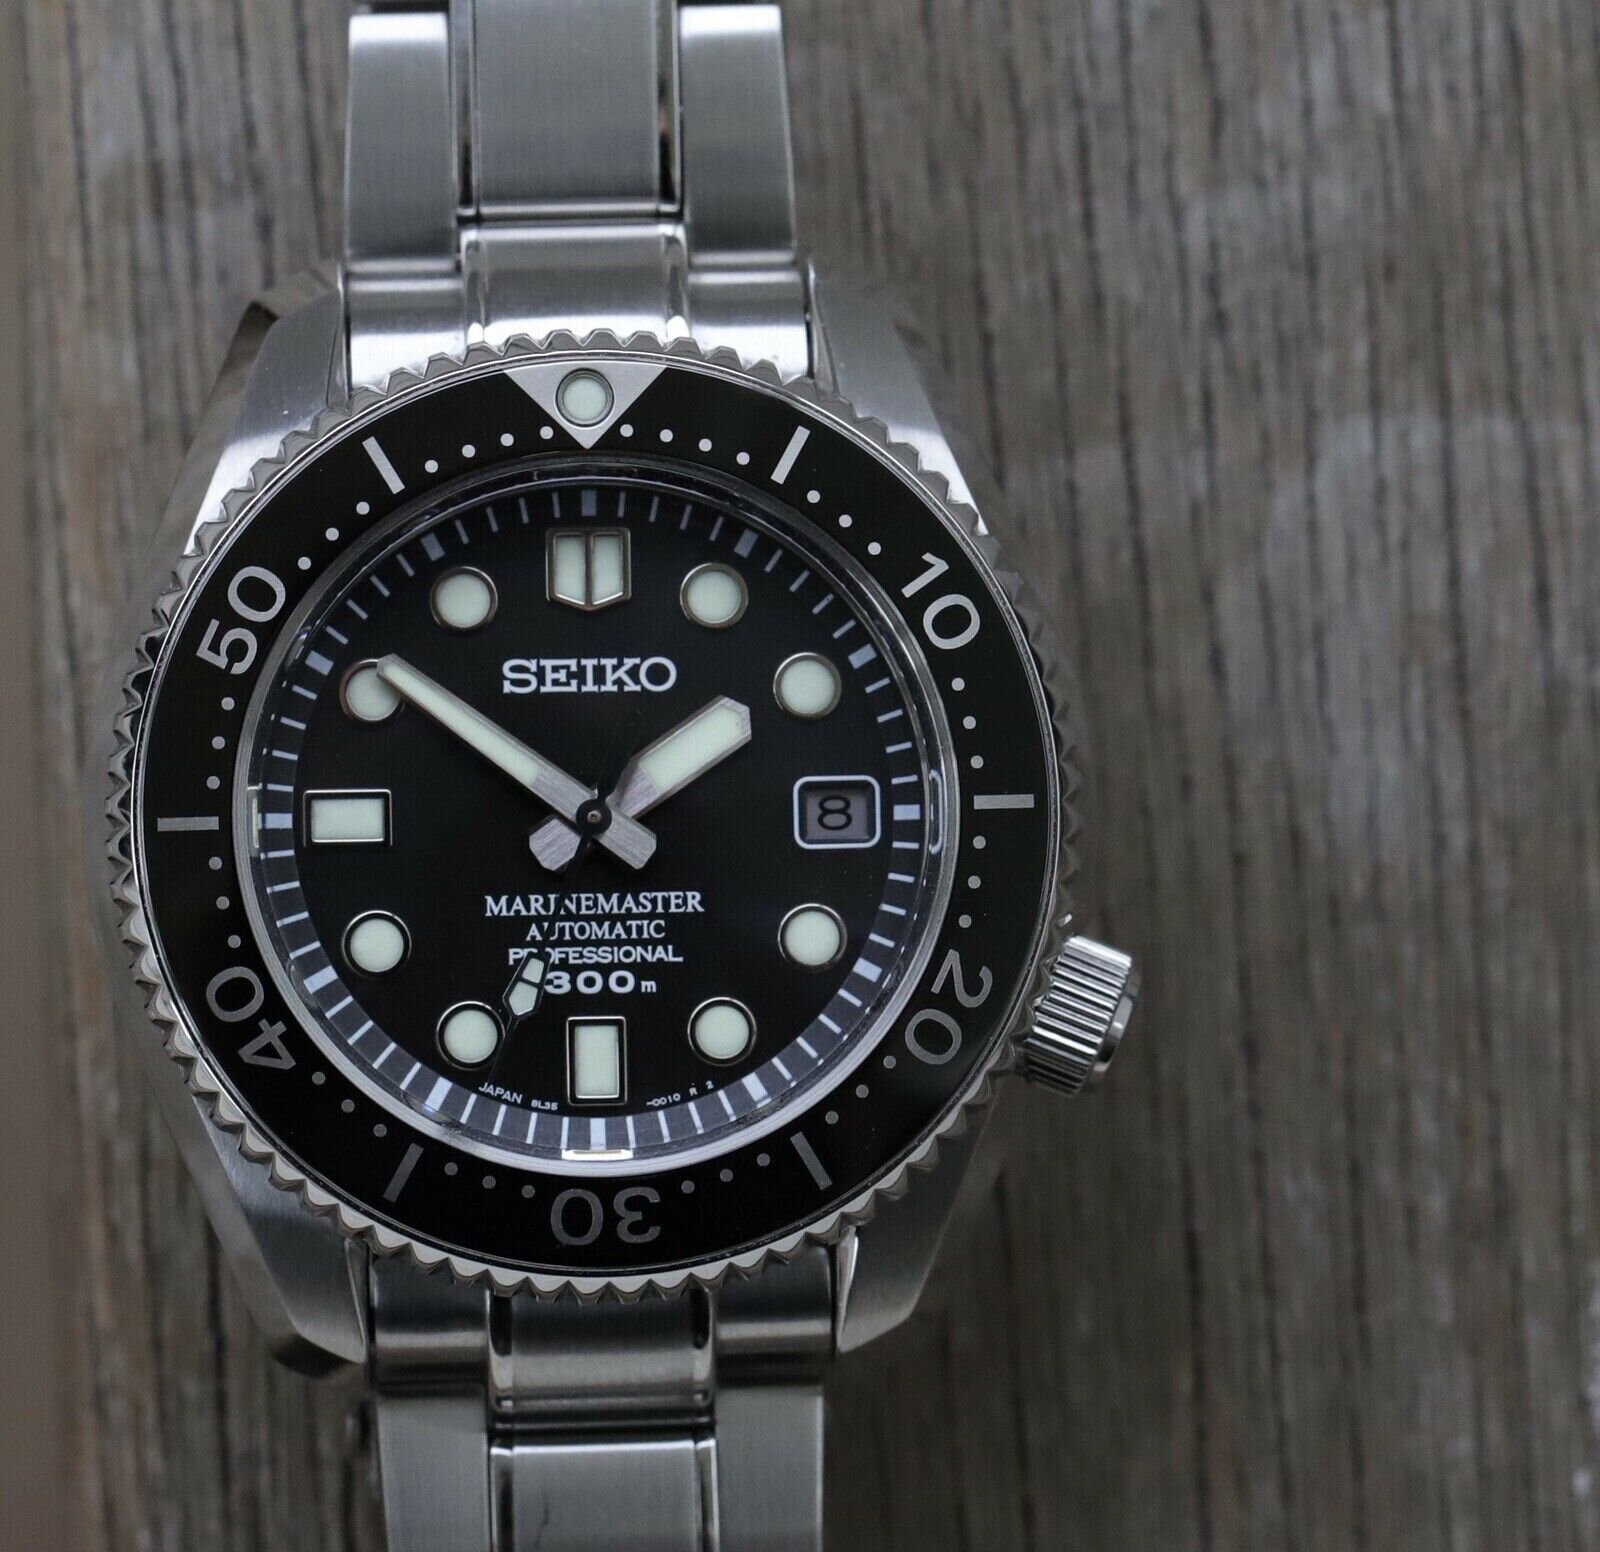 Seiko Marinemaster 300 Sbdx001 12 Watch Vault